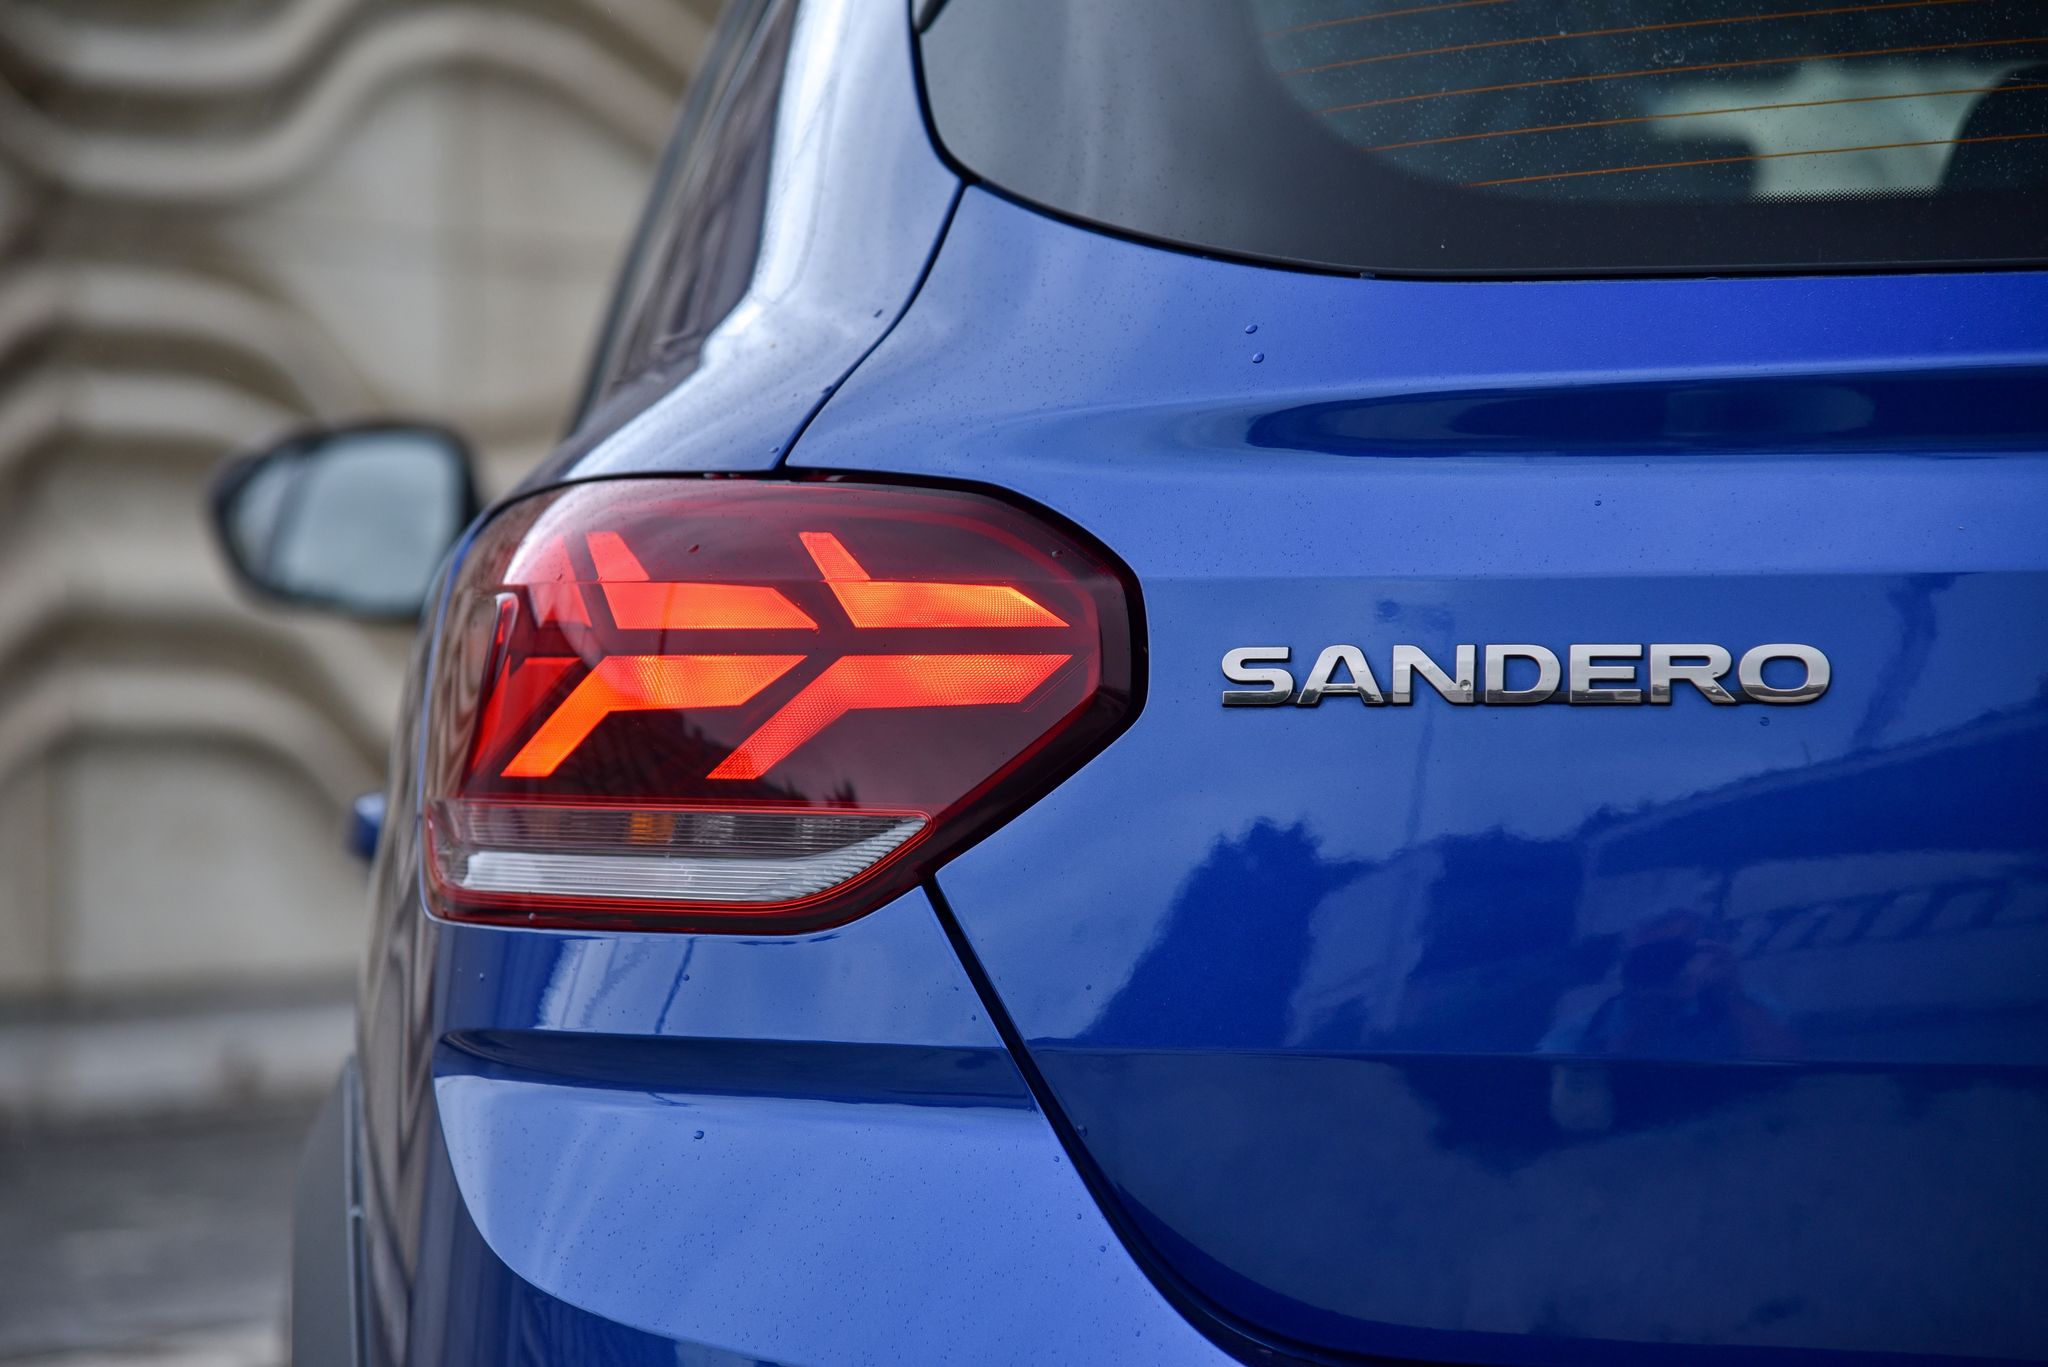 Dacia Sandero logo on a back of rental car in iceland 